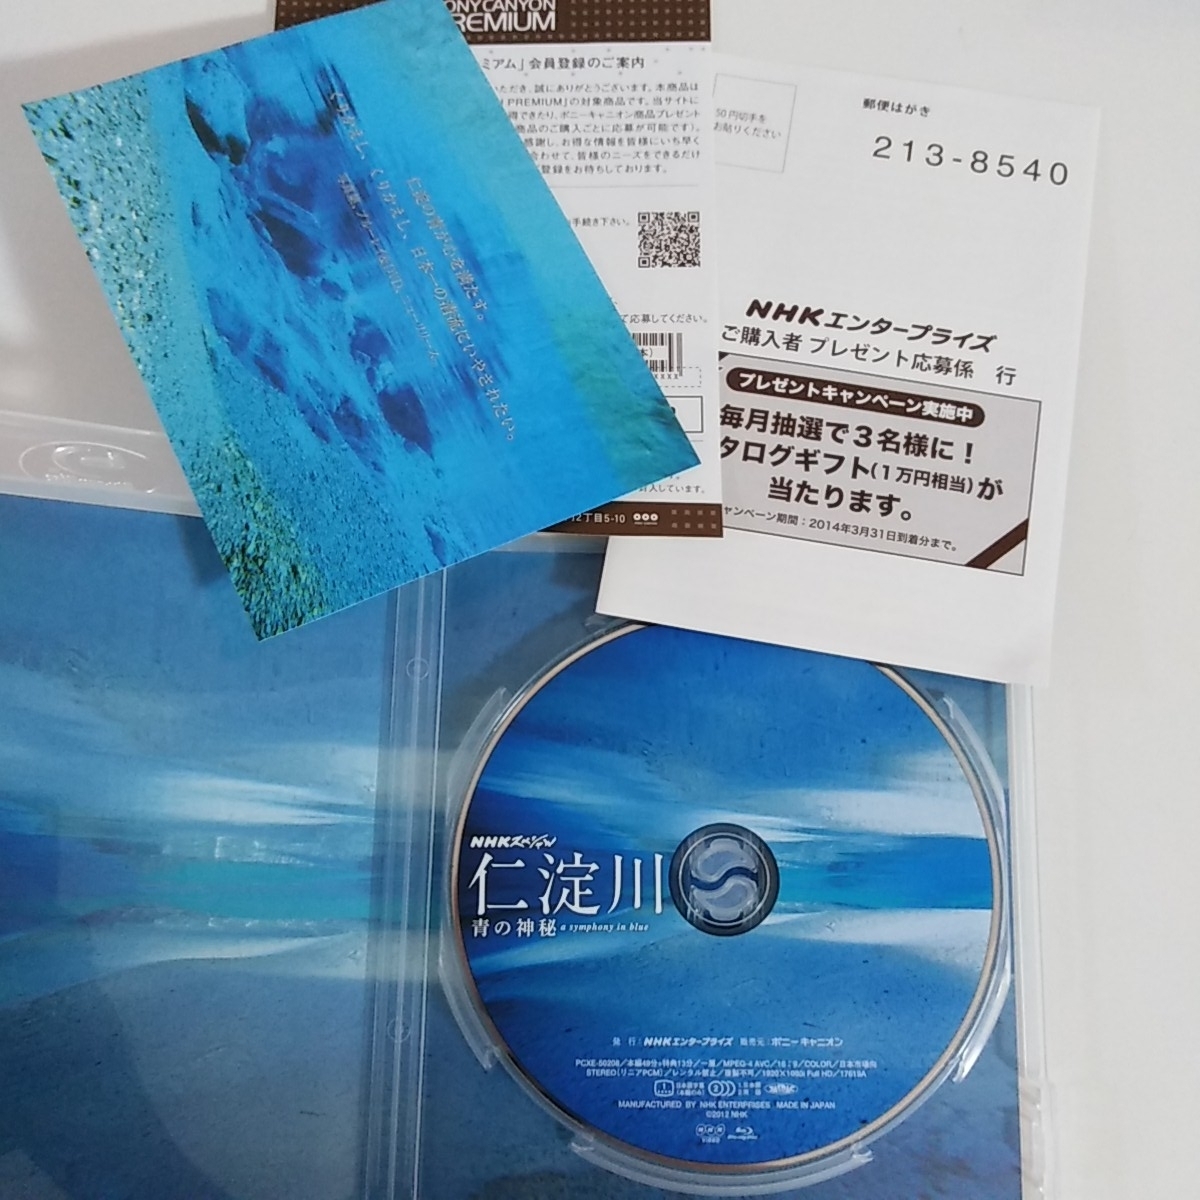 NHK special .. river blue. god .[Blu-ray]